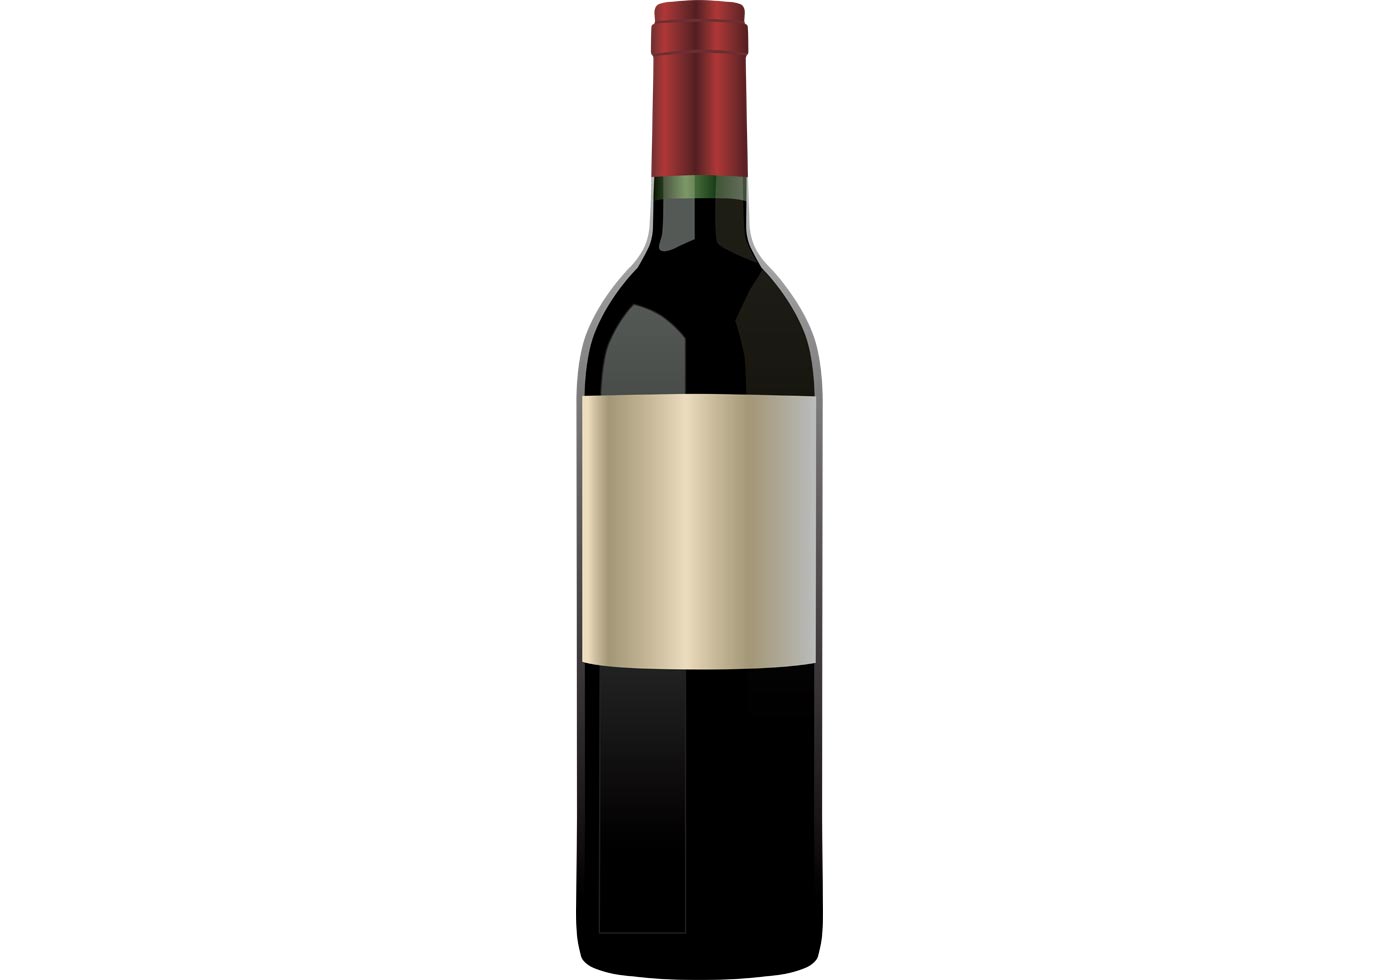 Wine bottle free vector art downloads clip art